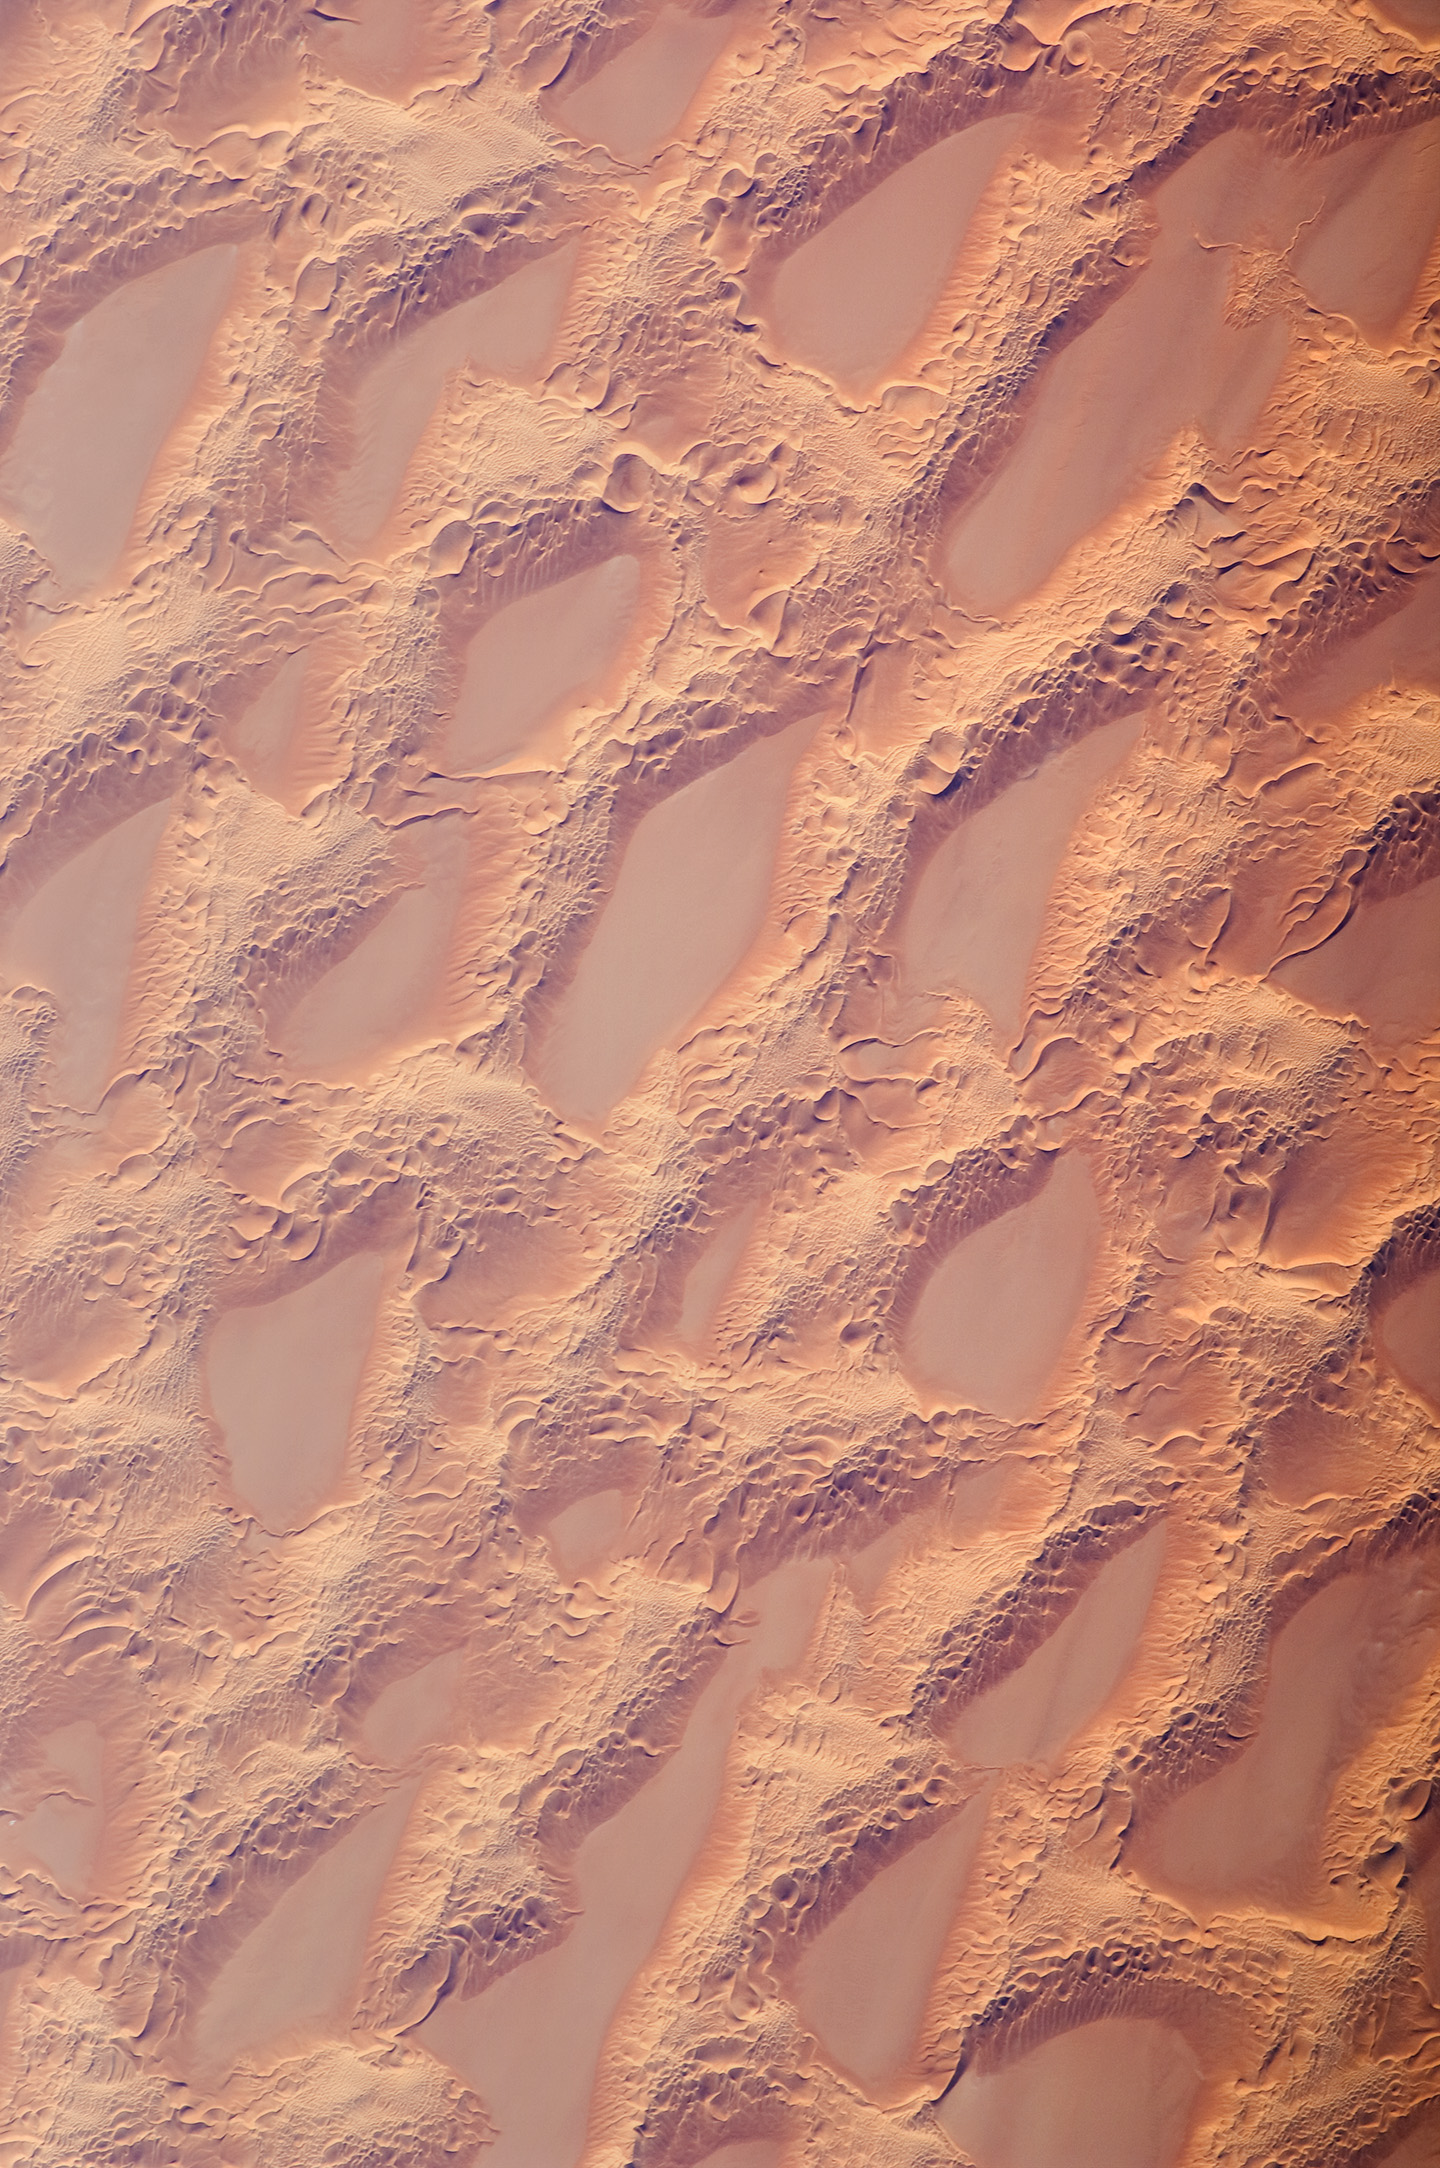 Sand Dunes, Marzuq Sand Sea, Southwest Libya.jpg